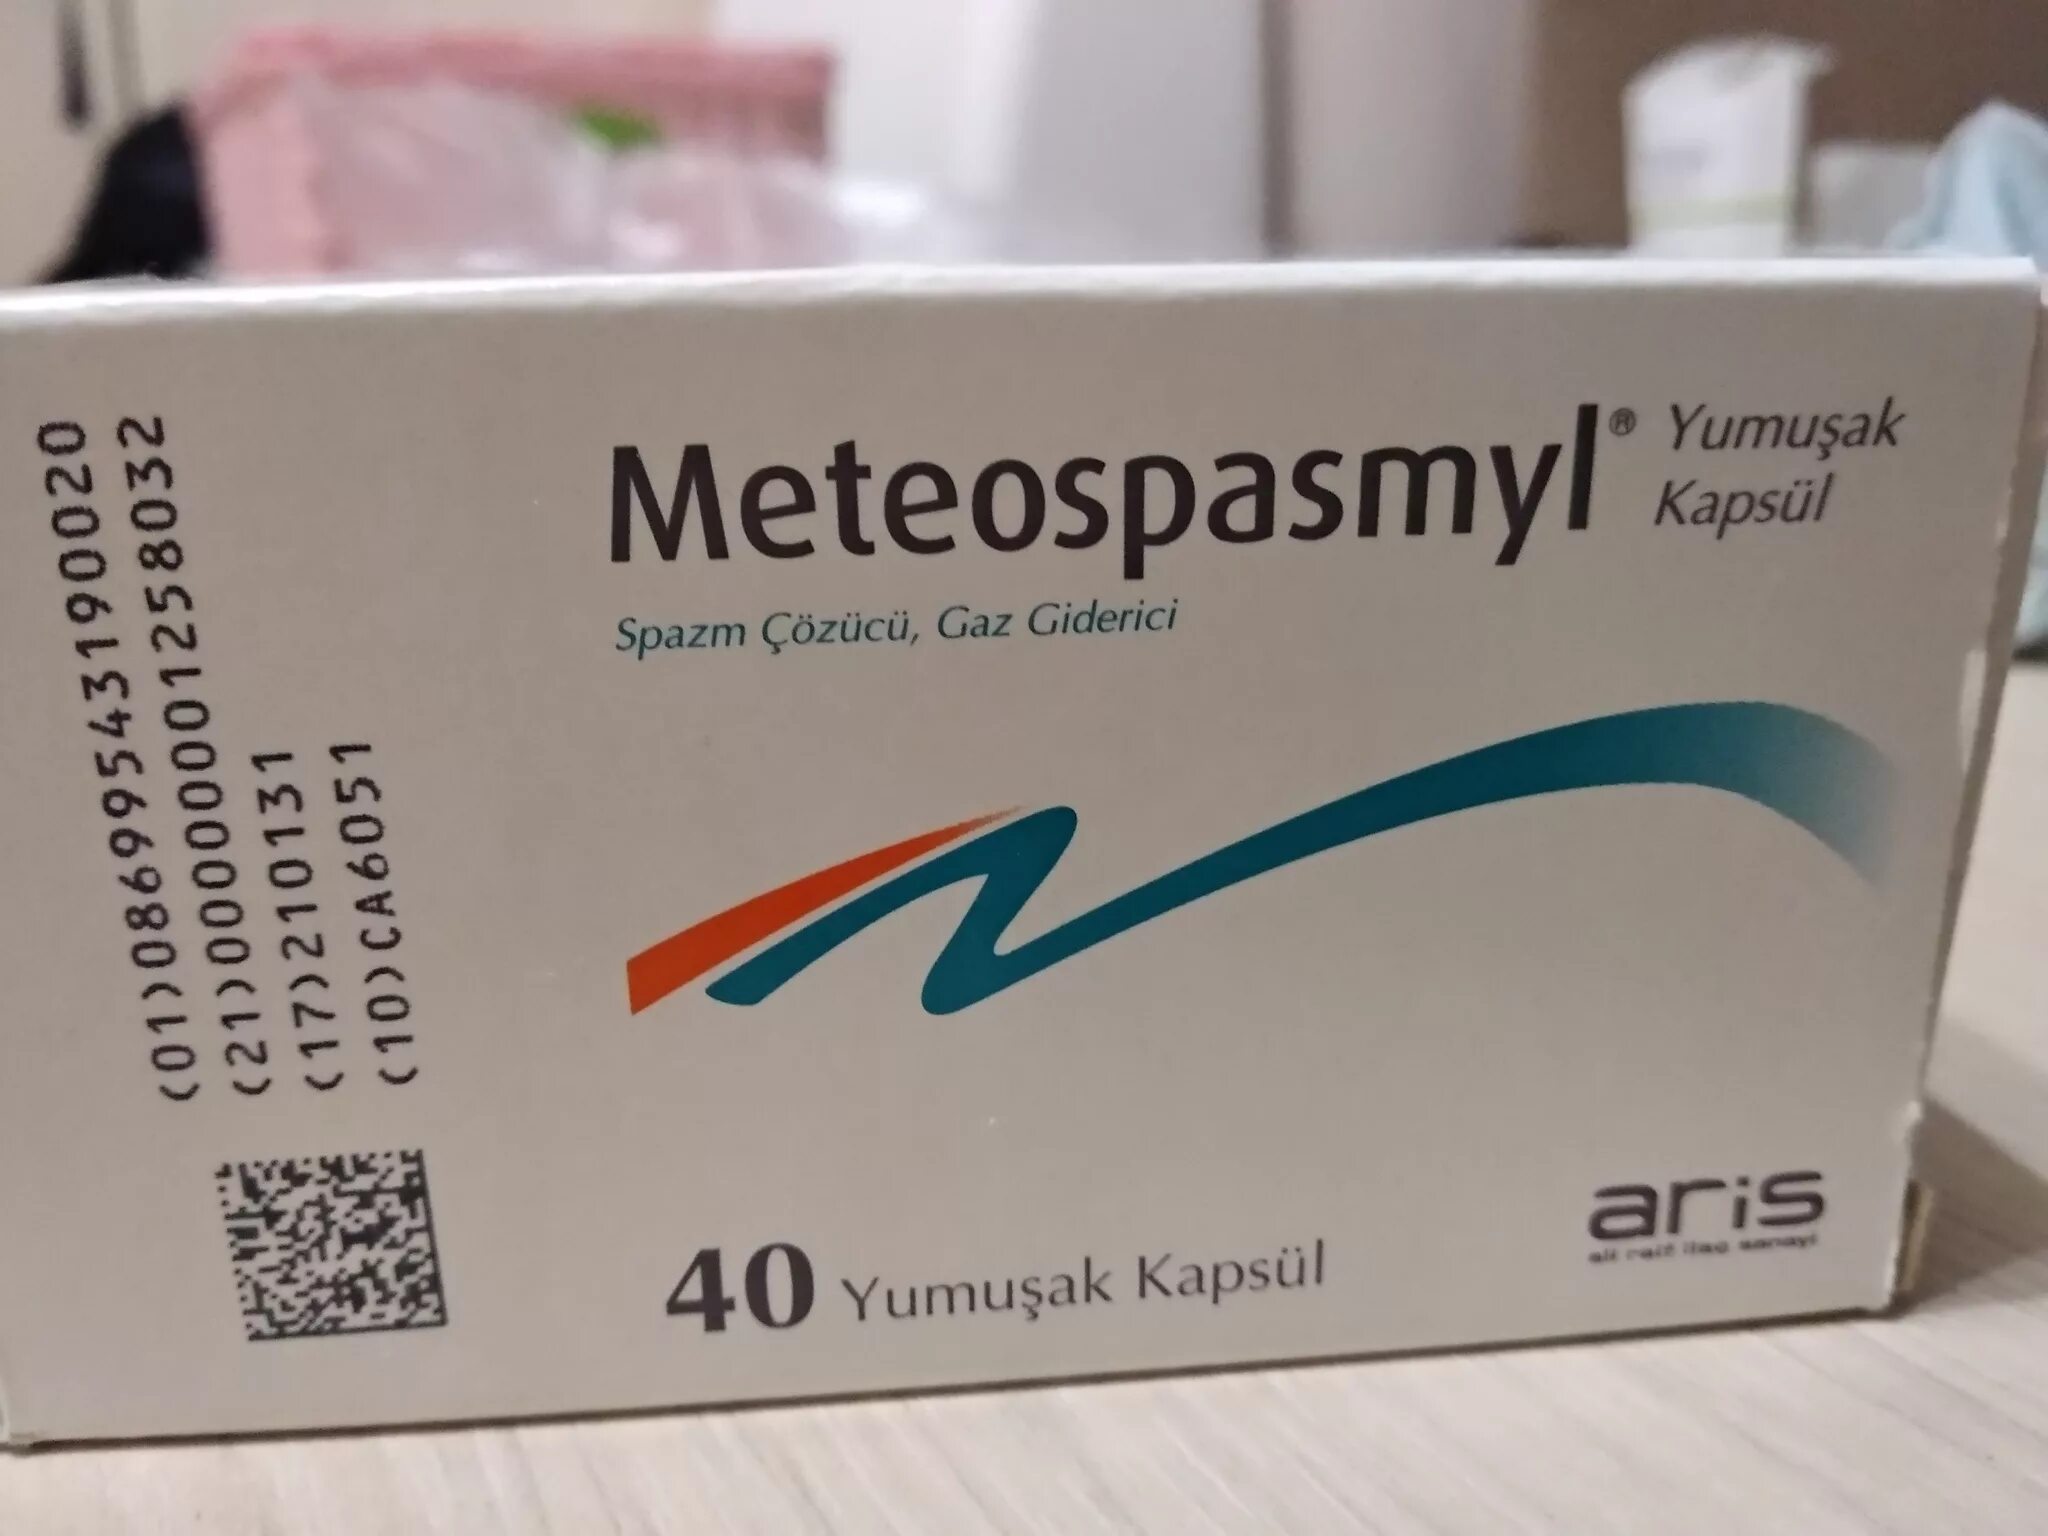 Meteospasmyl турецкий. Турецкие лекарства. Турецкие таблетки. Медикаменты из Турции.